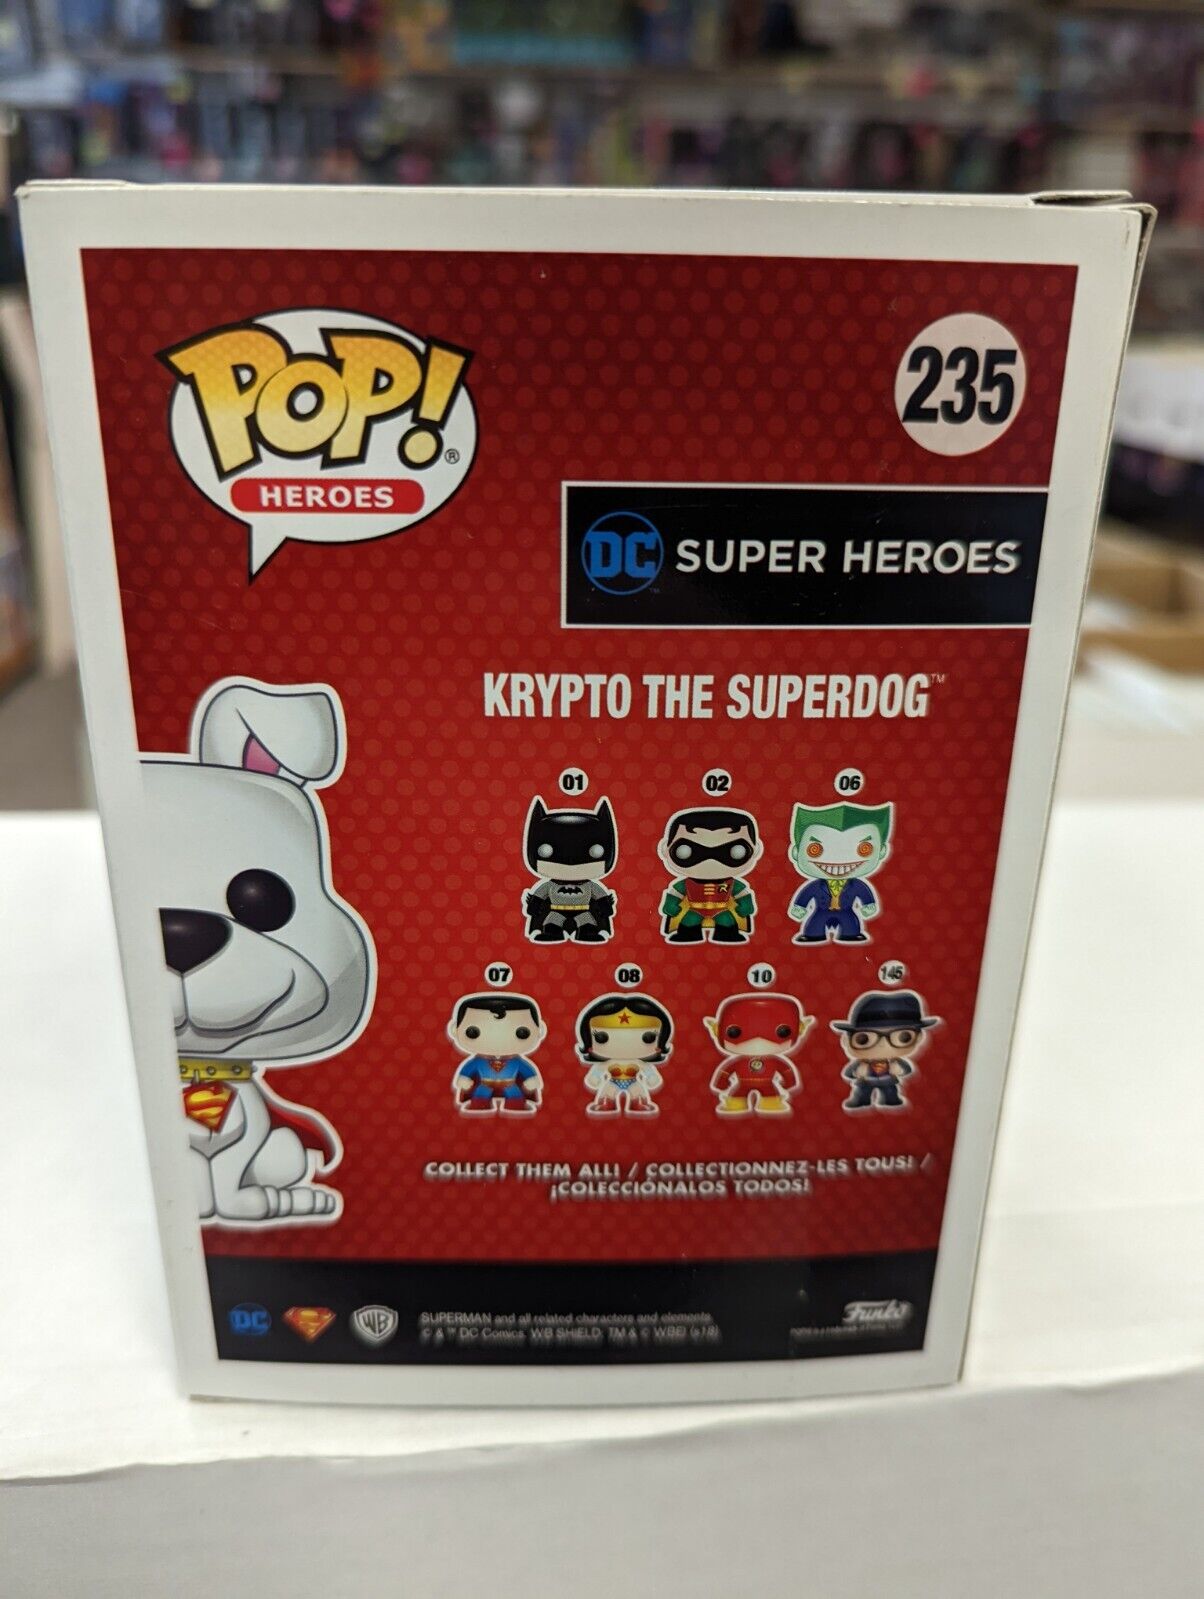 Funko Pop Krypto The Superdog 235 Specialty Series